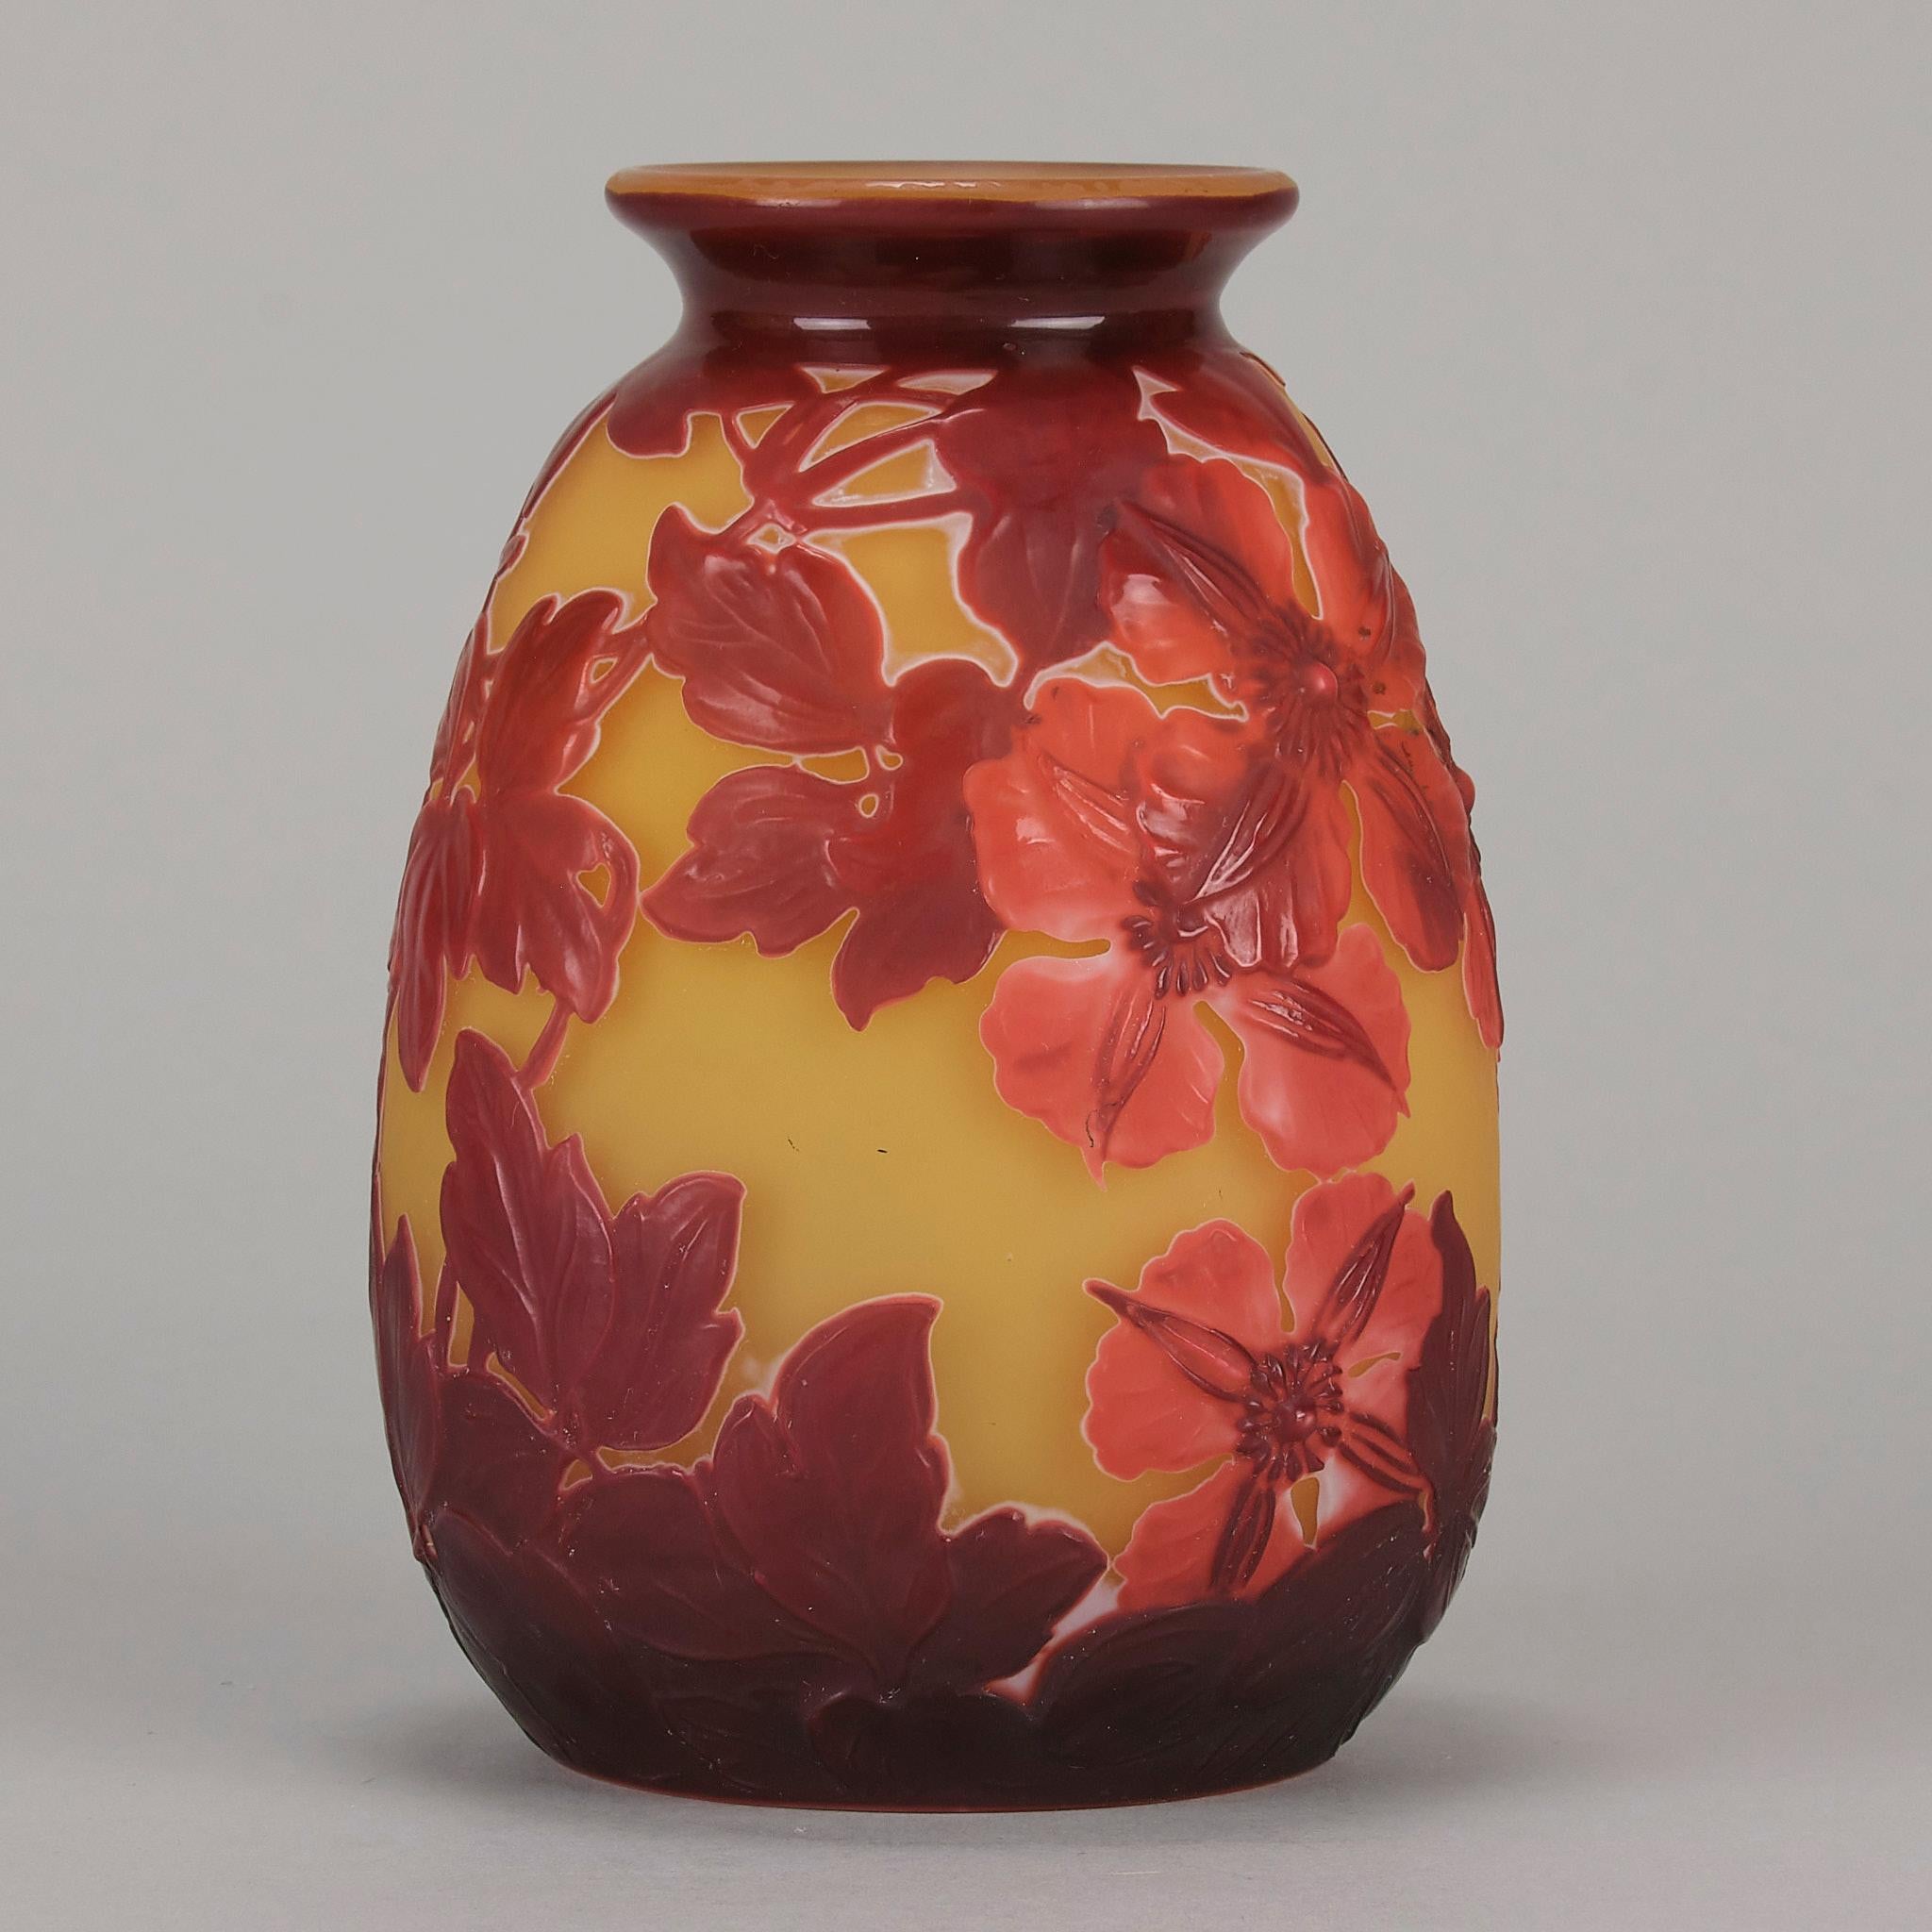 Molded Early 20th Century Art Nouveau Vase 